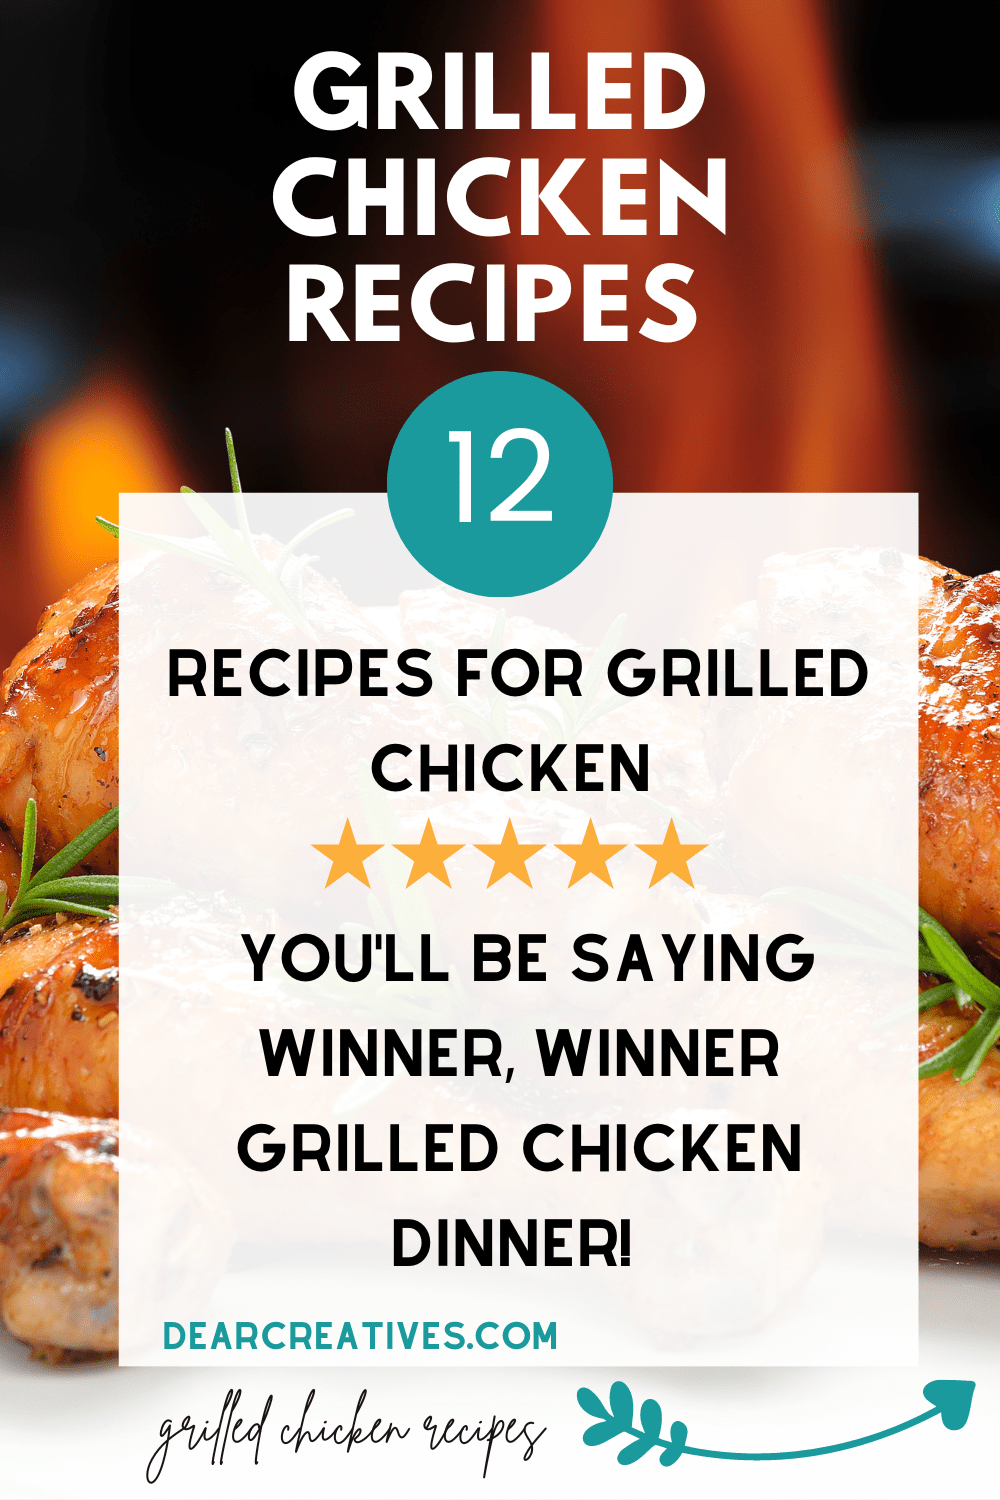 Winner, Winner 12 Grilled Chicken Recipes!